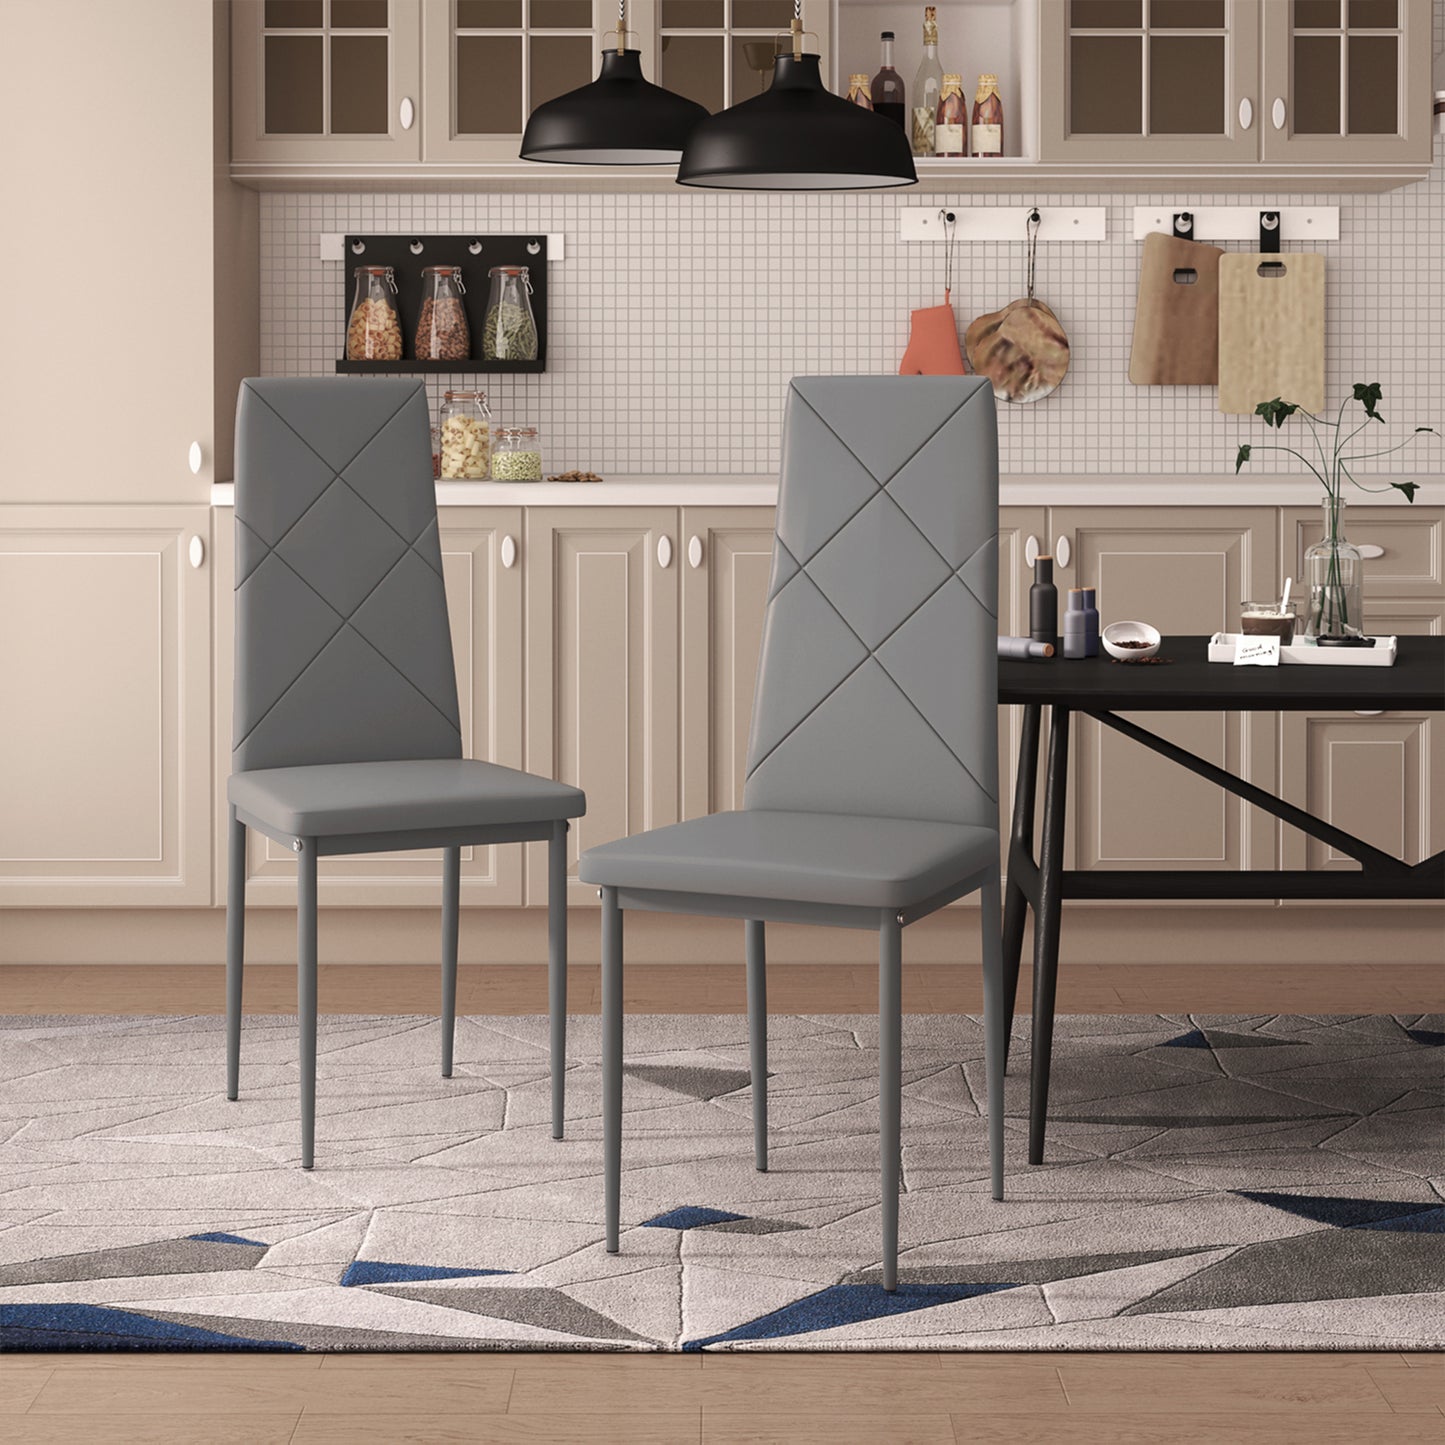 ANN-DIAMOND Upholstered Dining Chair with Iron Legs - Dark Gray